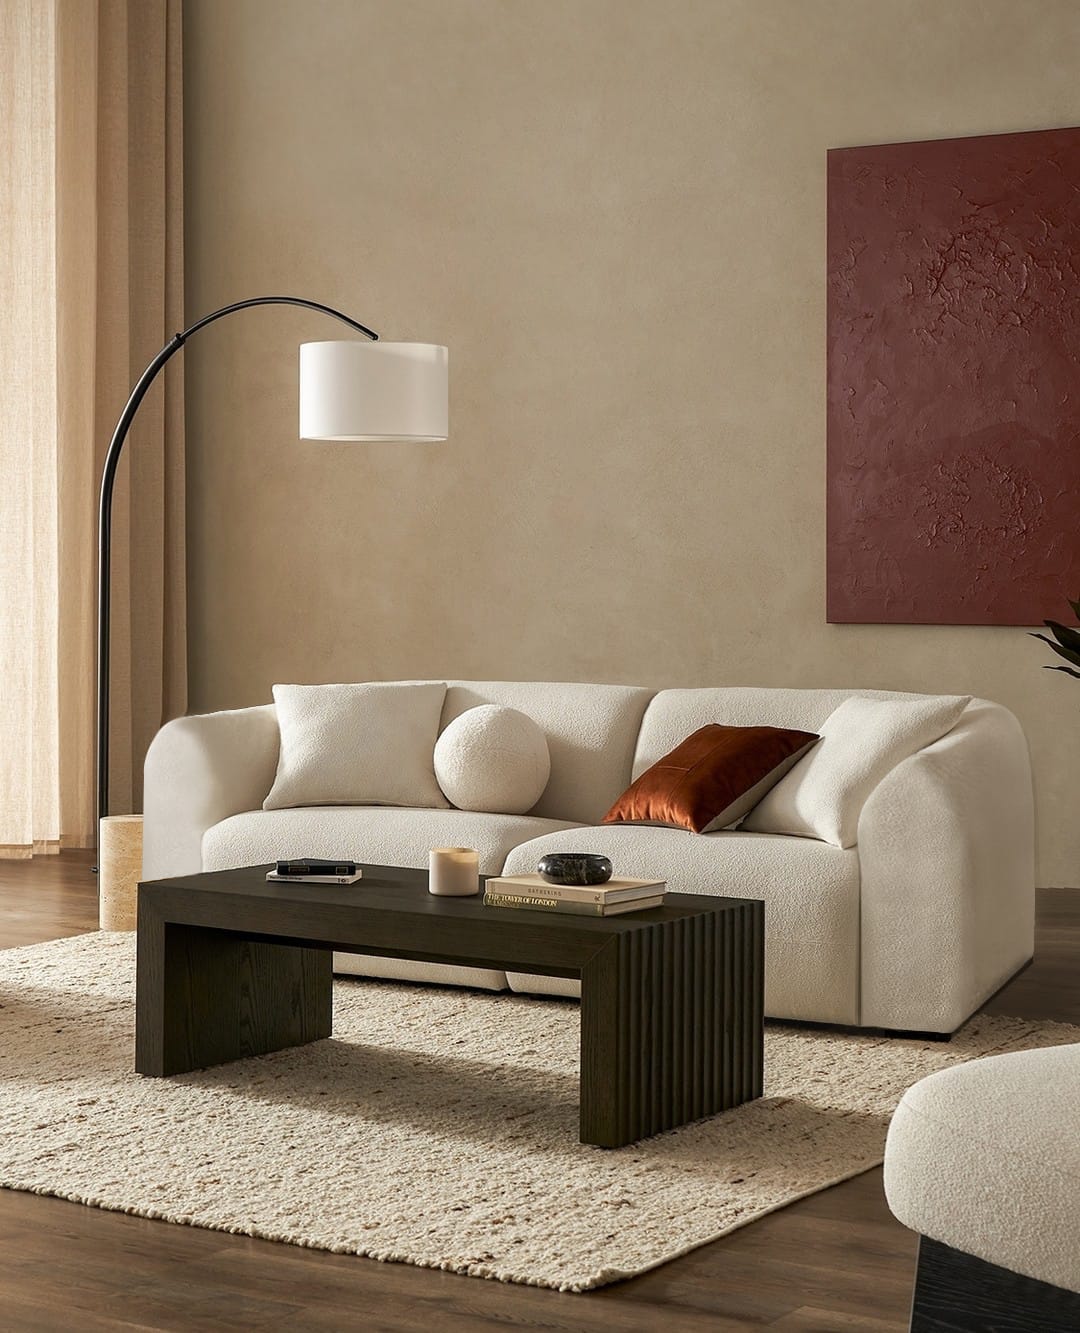 Fascinating Modern Light Luxury Minimalist And Versatile Living Room